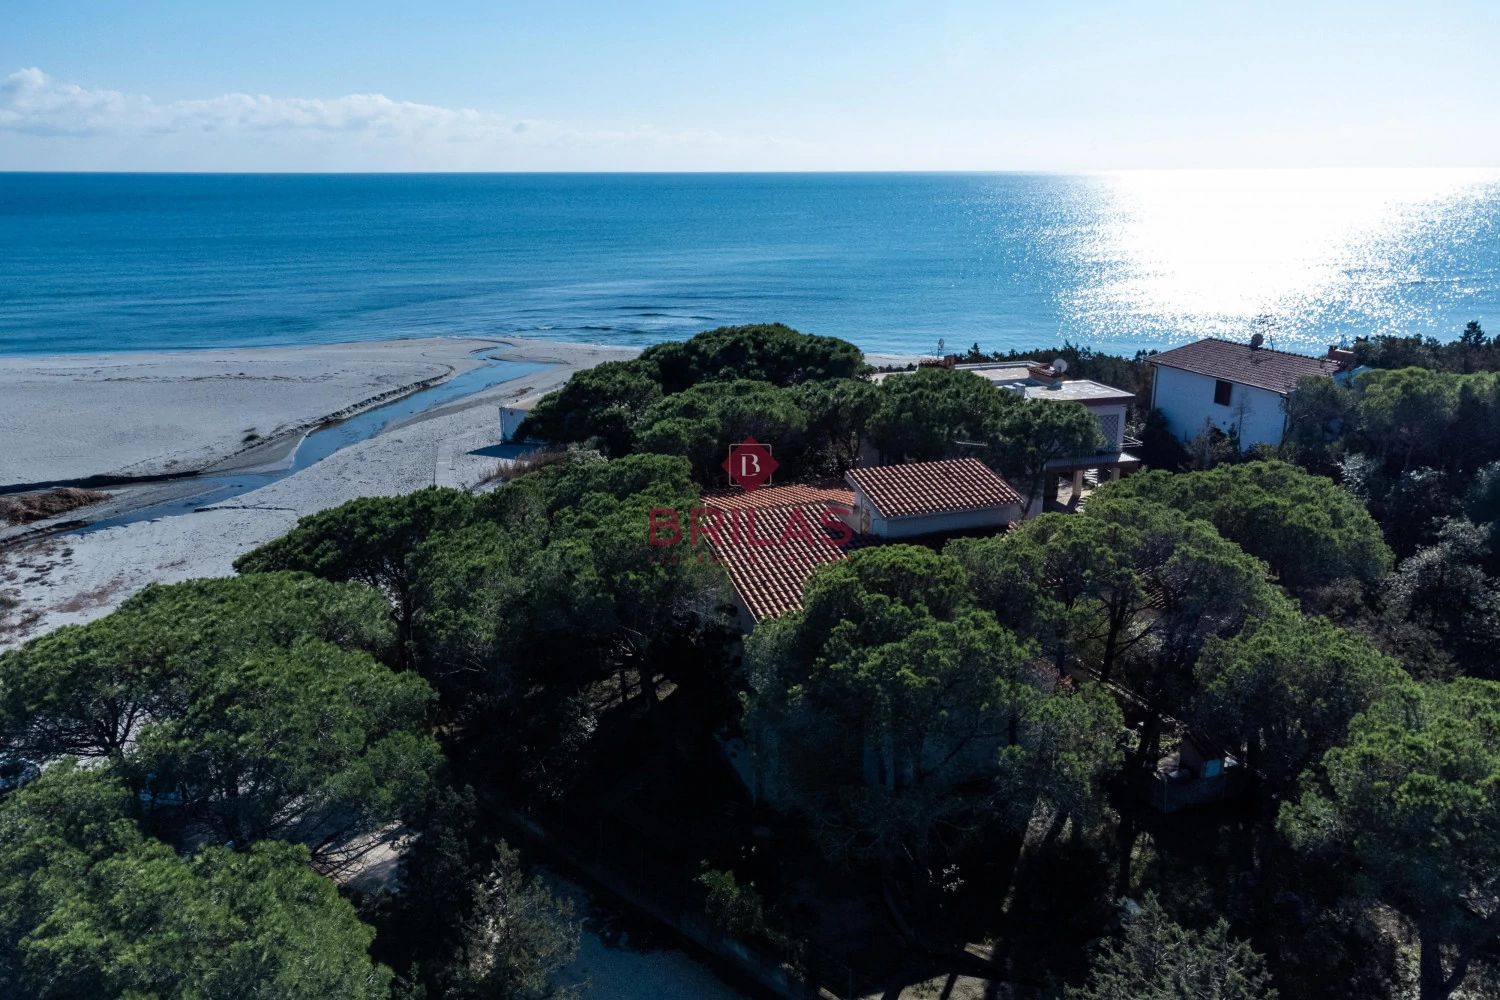 Cala Liberotto - Villa on the beach